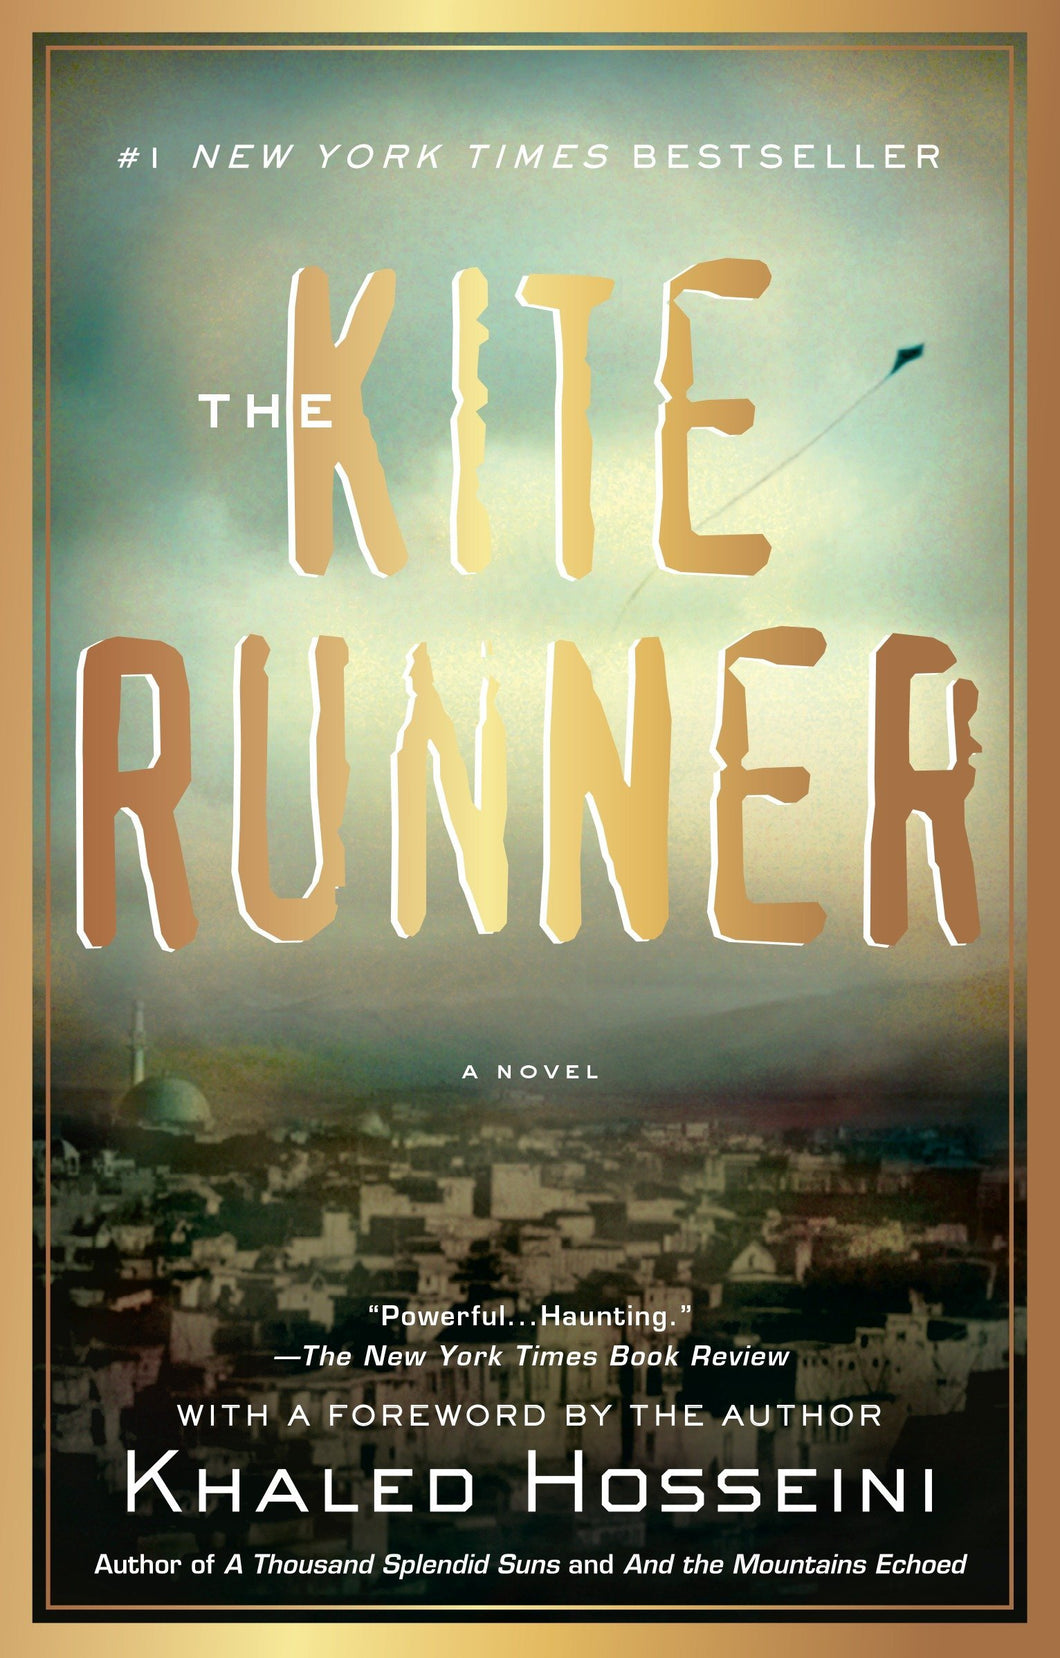 The Kite Runner (anniversary edition) by Khaled Hosseini